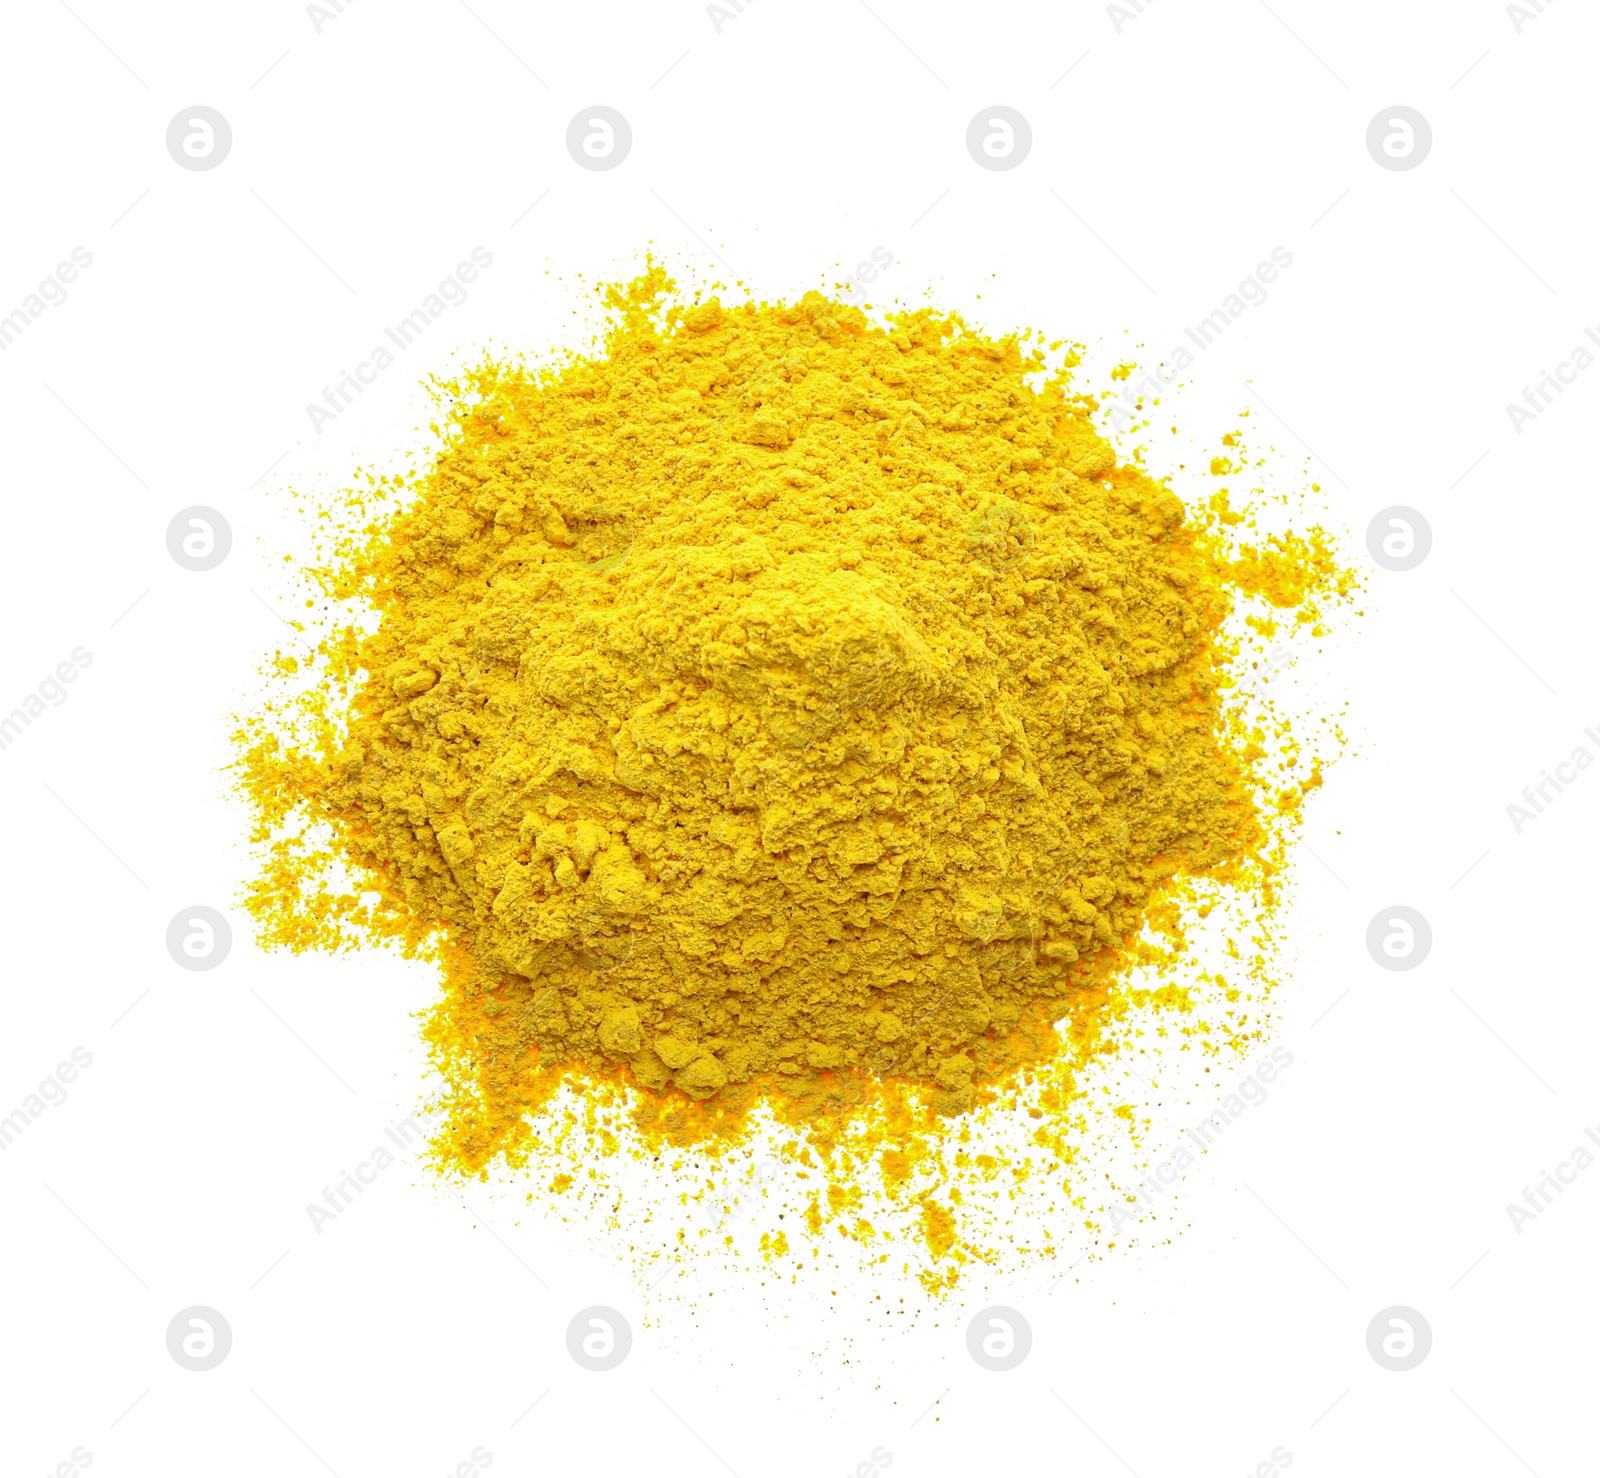 Photo of Pile of yellow powder isolated on white, top view. Holi festival celebration